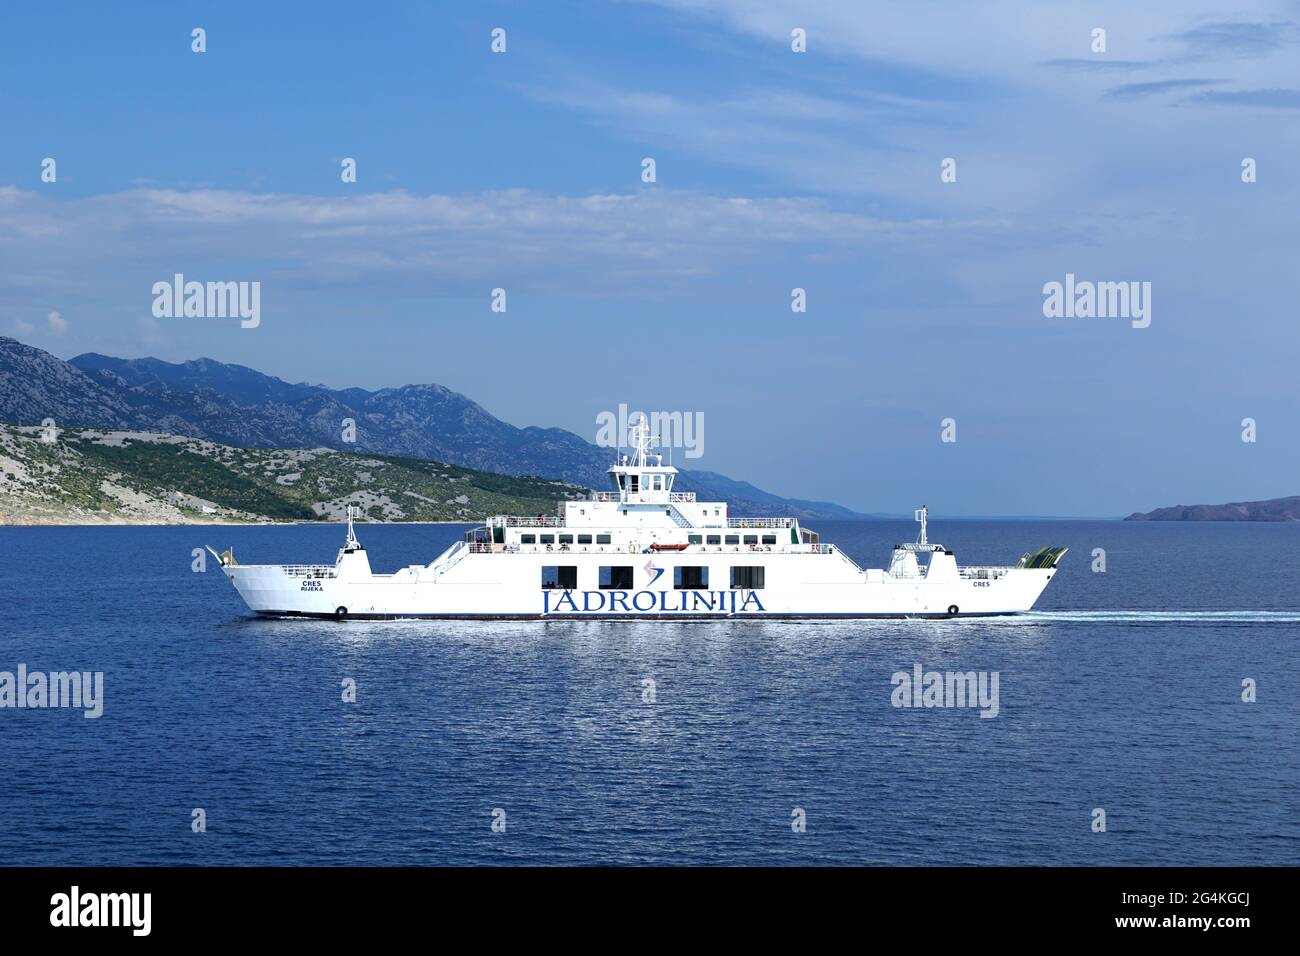 The ferry of the national Croatian shipping company Jadrolinija sails between the island and the mainland Stock Photo